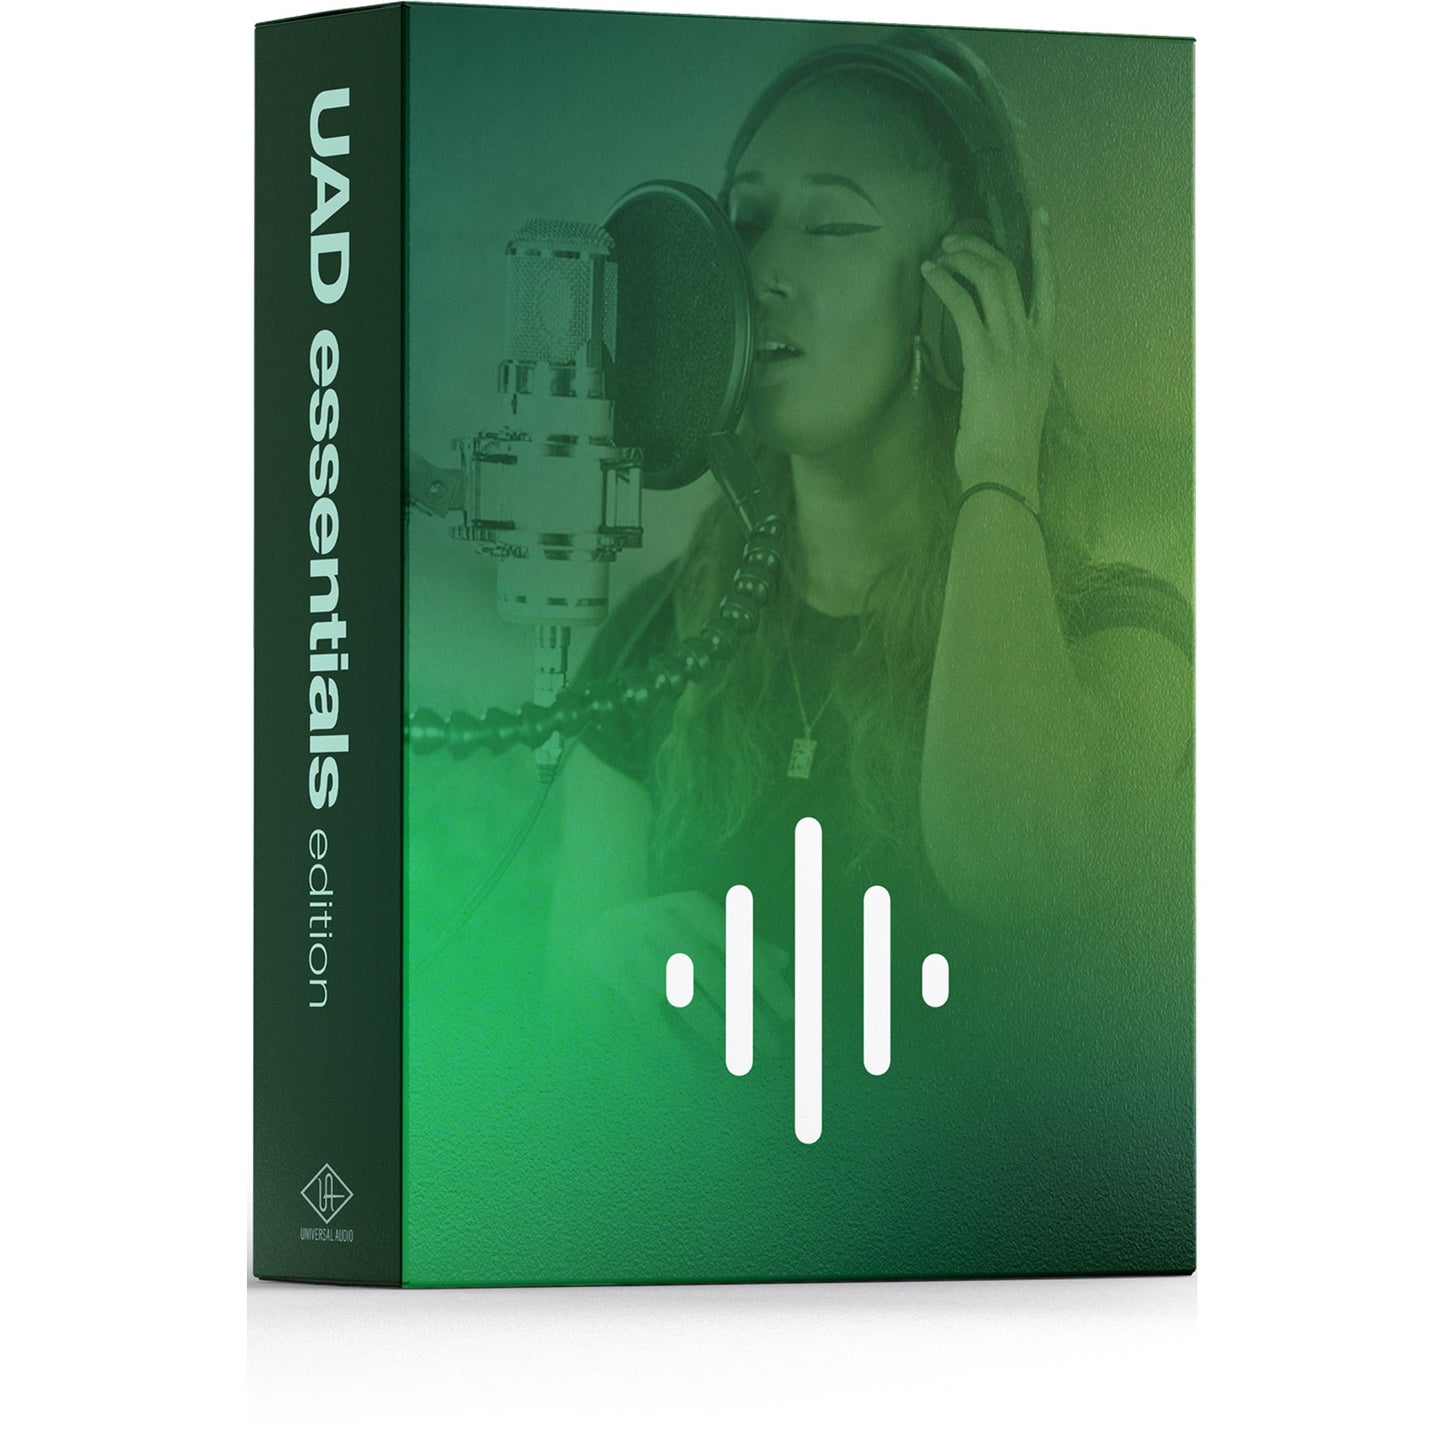 Universal Audio Essential Edition Bundle